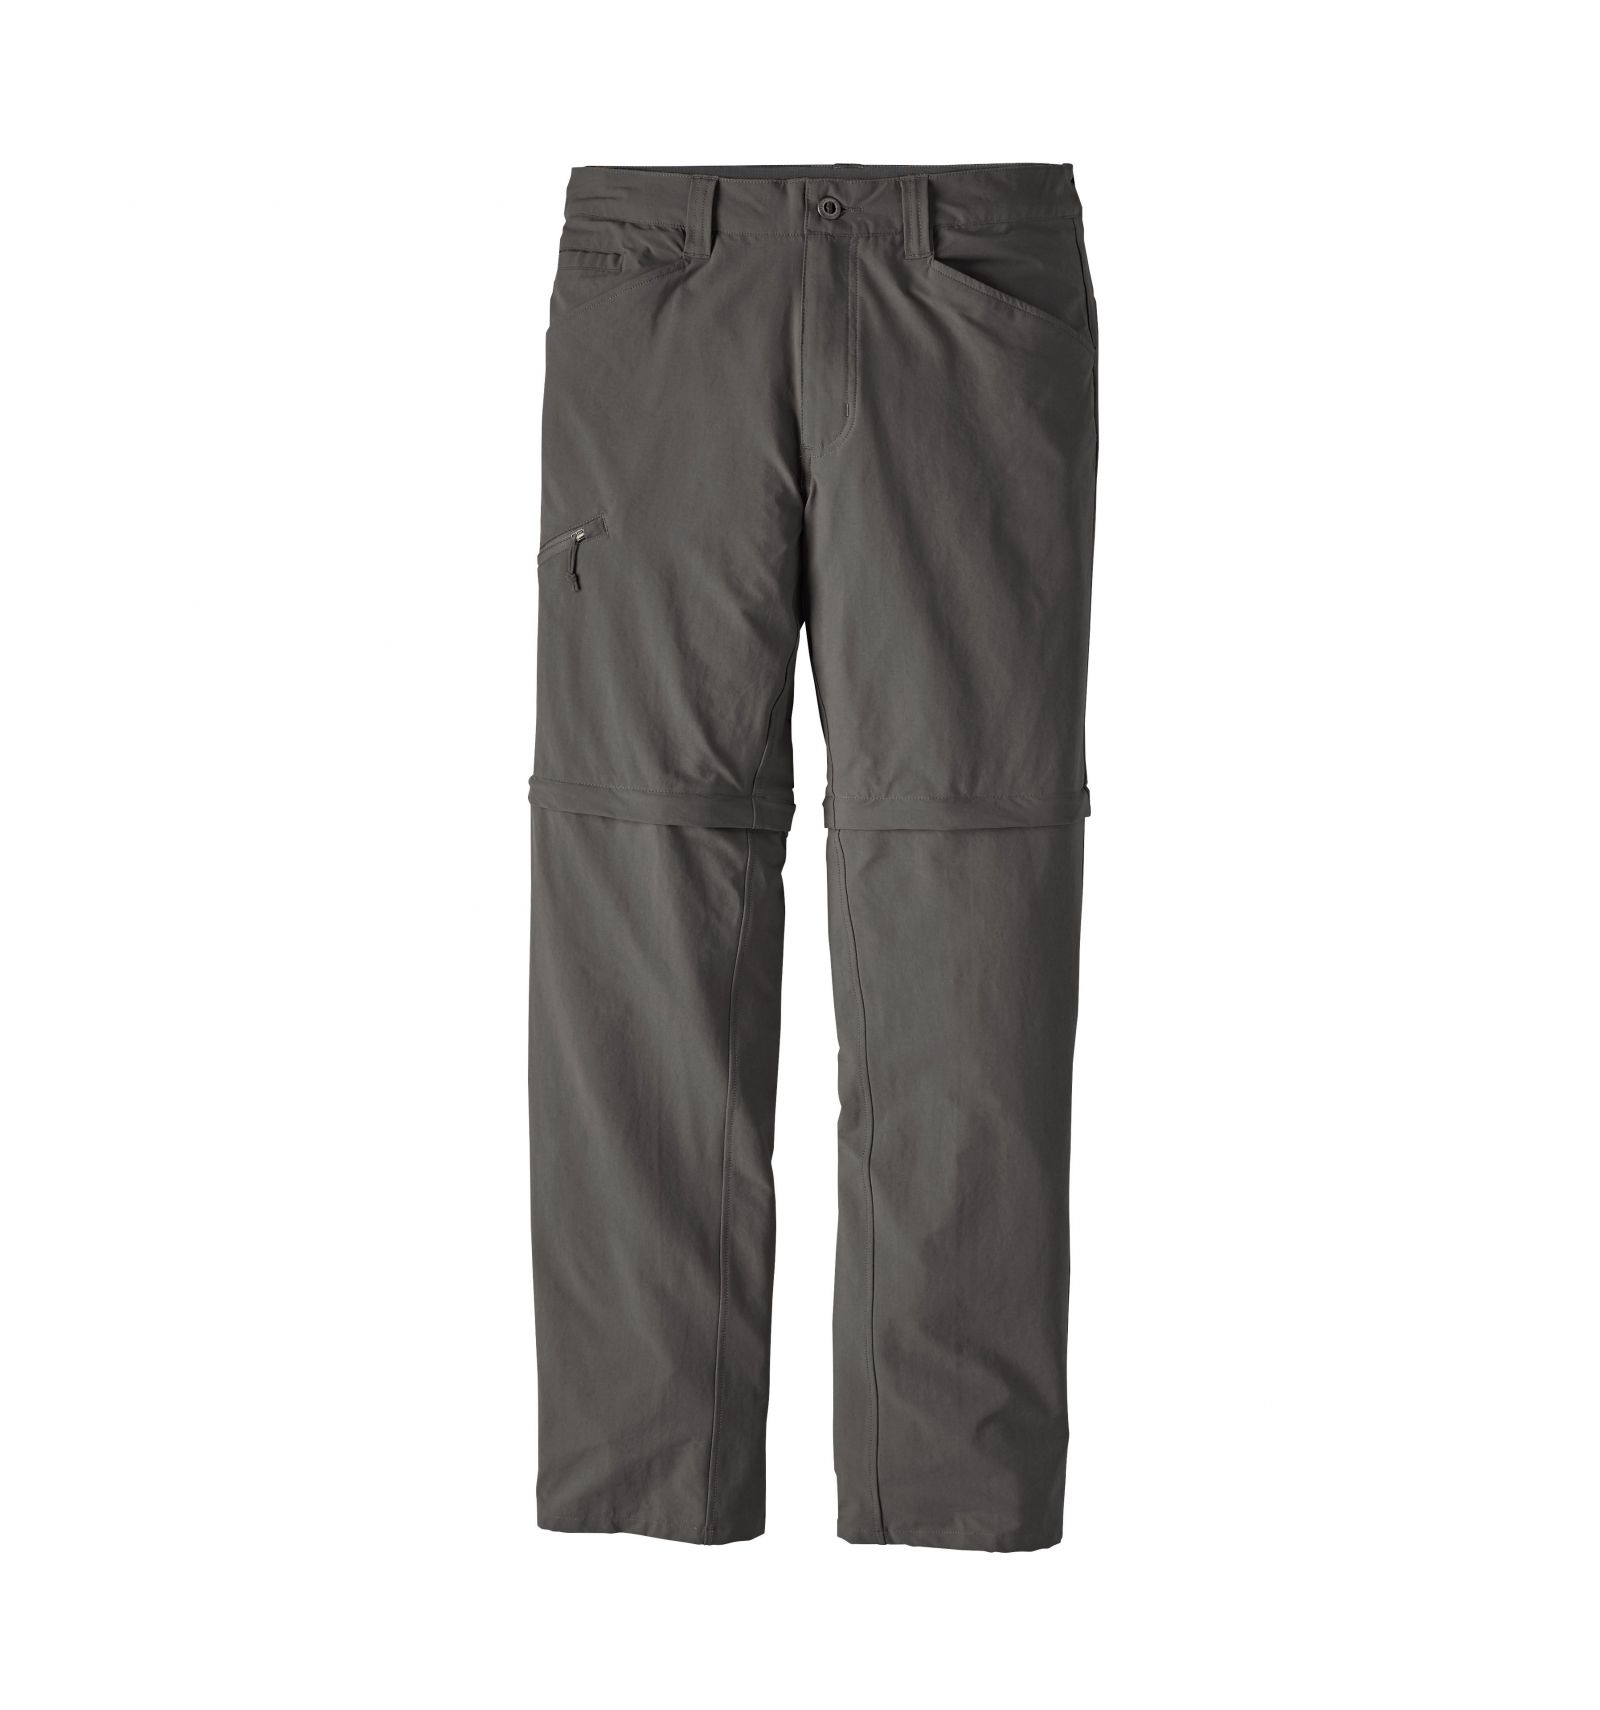 Quandary Convertible Pants - Patagonia (Forge grey) - Alpinstore